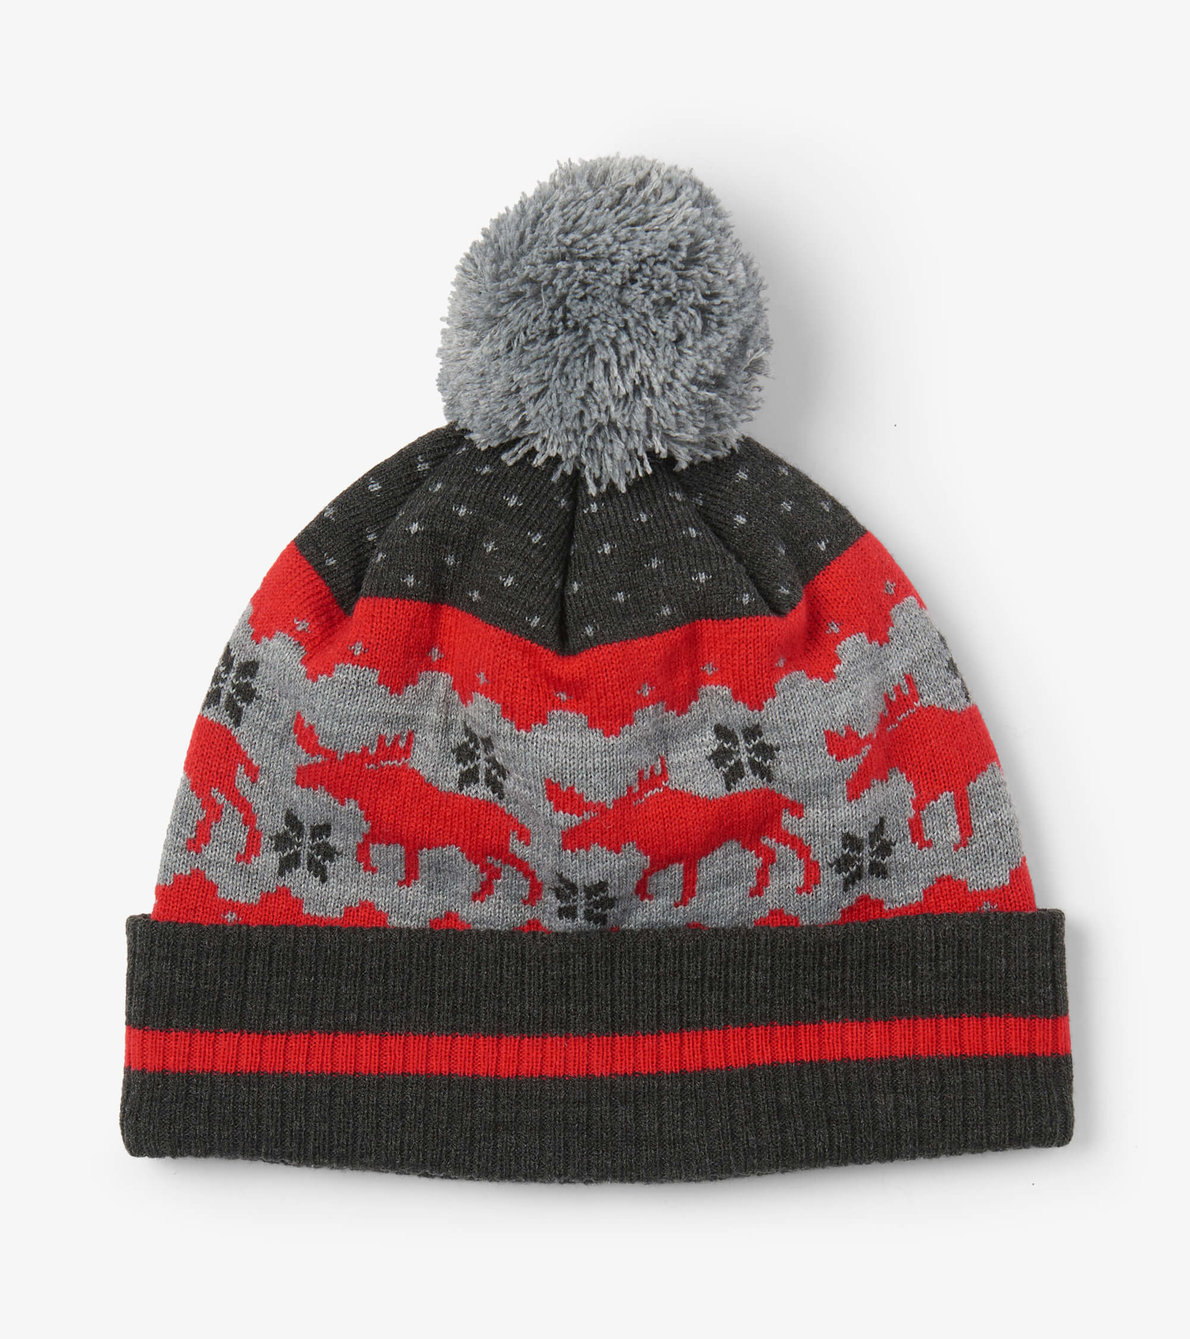 View larger image of Red Moose Adult Heritage Pom Pom Winter Hat